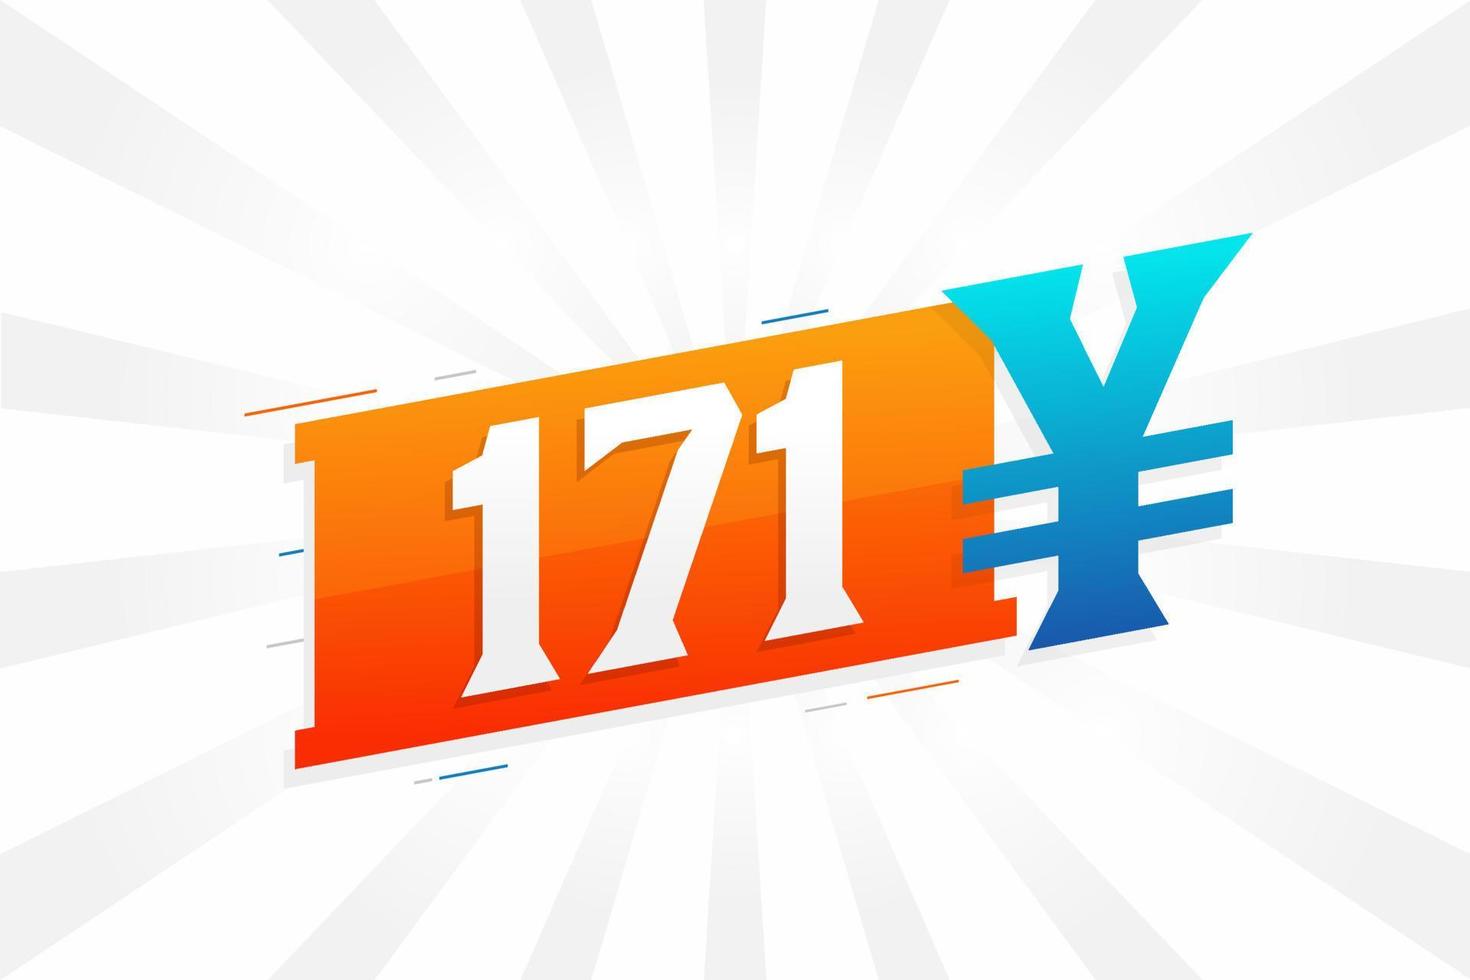 171 yuan Cinese moneta vettore testo simbolo. 171 yen giapponese moneta i soldi azione vettore